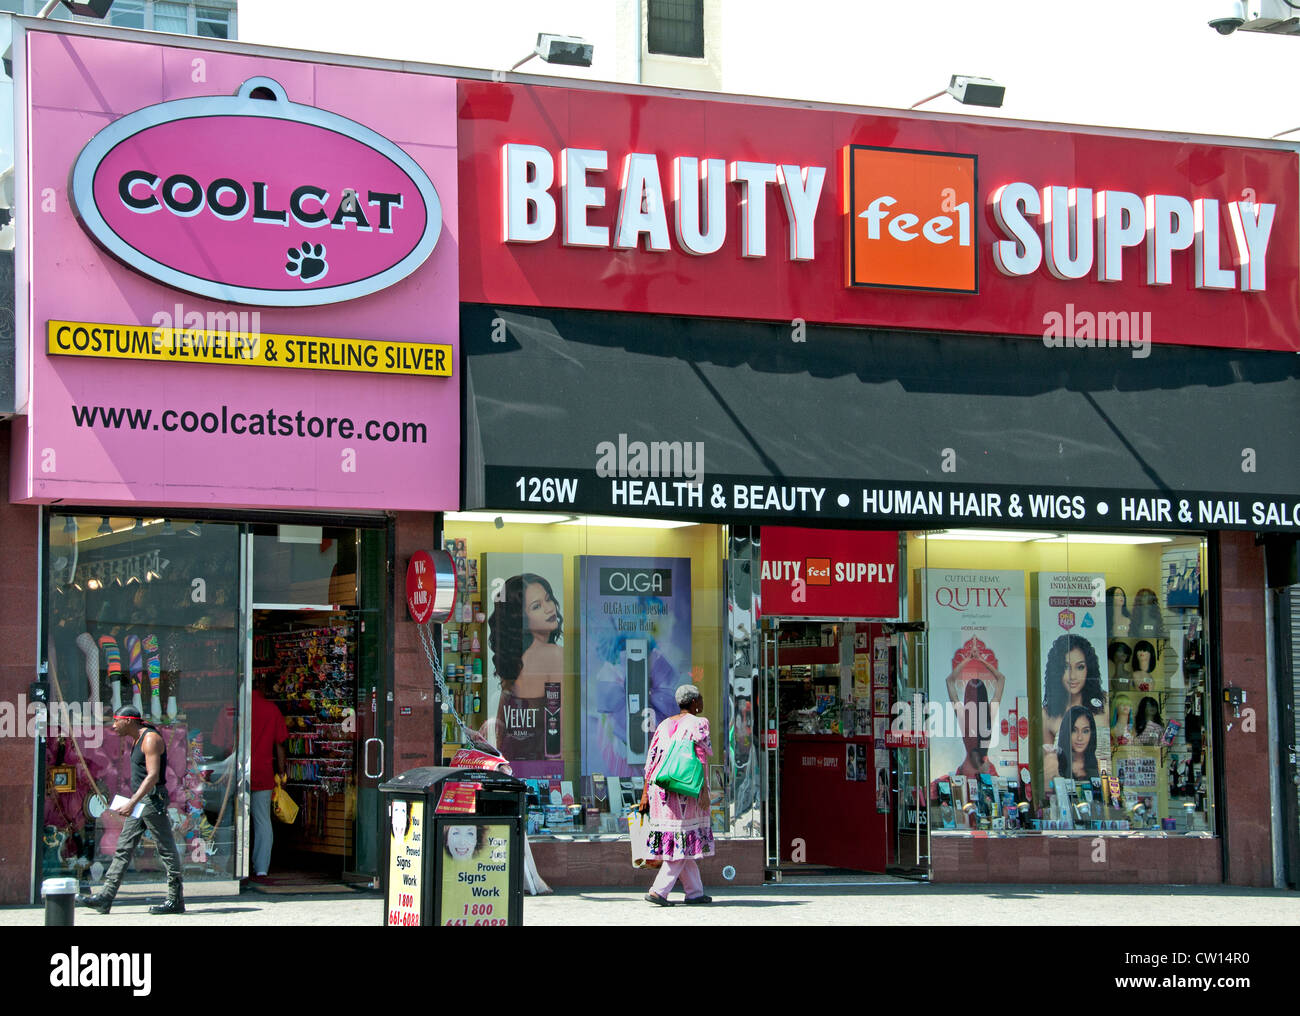 Coolcat Beauty Supply Dr Martin Luther King Jr. Boulevard Harlem New York Manhattan-USA Stockfoto